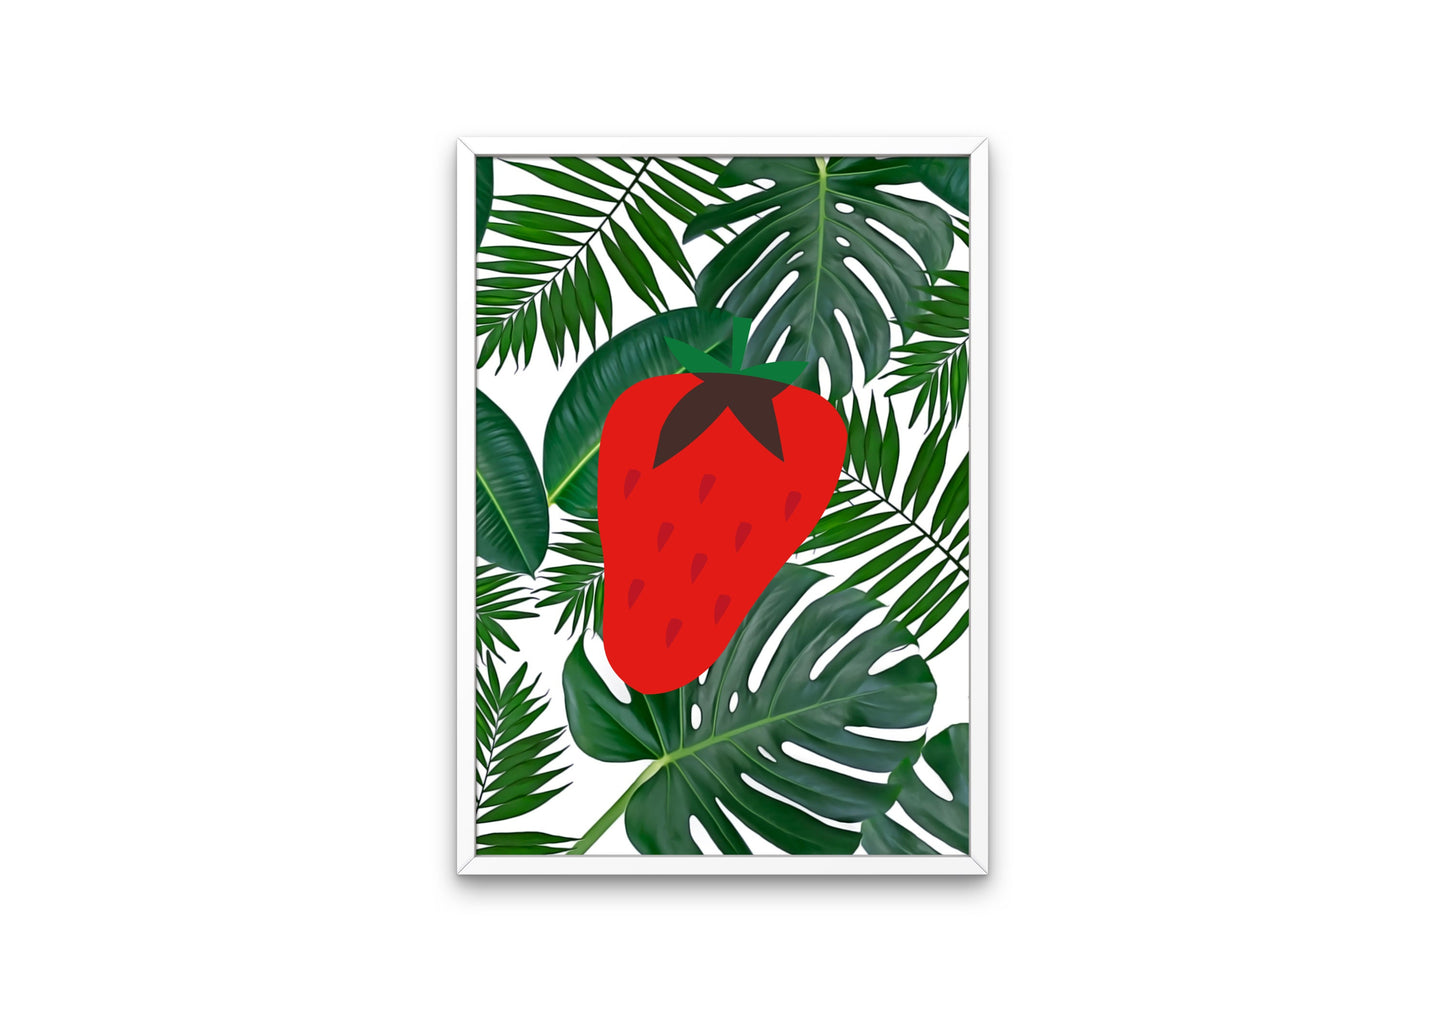 Summer Banana Leaf Fruit Posters set of 4 DIGITAL PRINTS, Bright Tropical Pattern, Preppy Colorful Wall Art, banana leaf, fruit market print